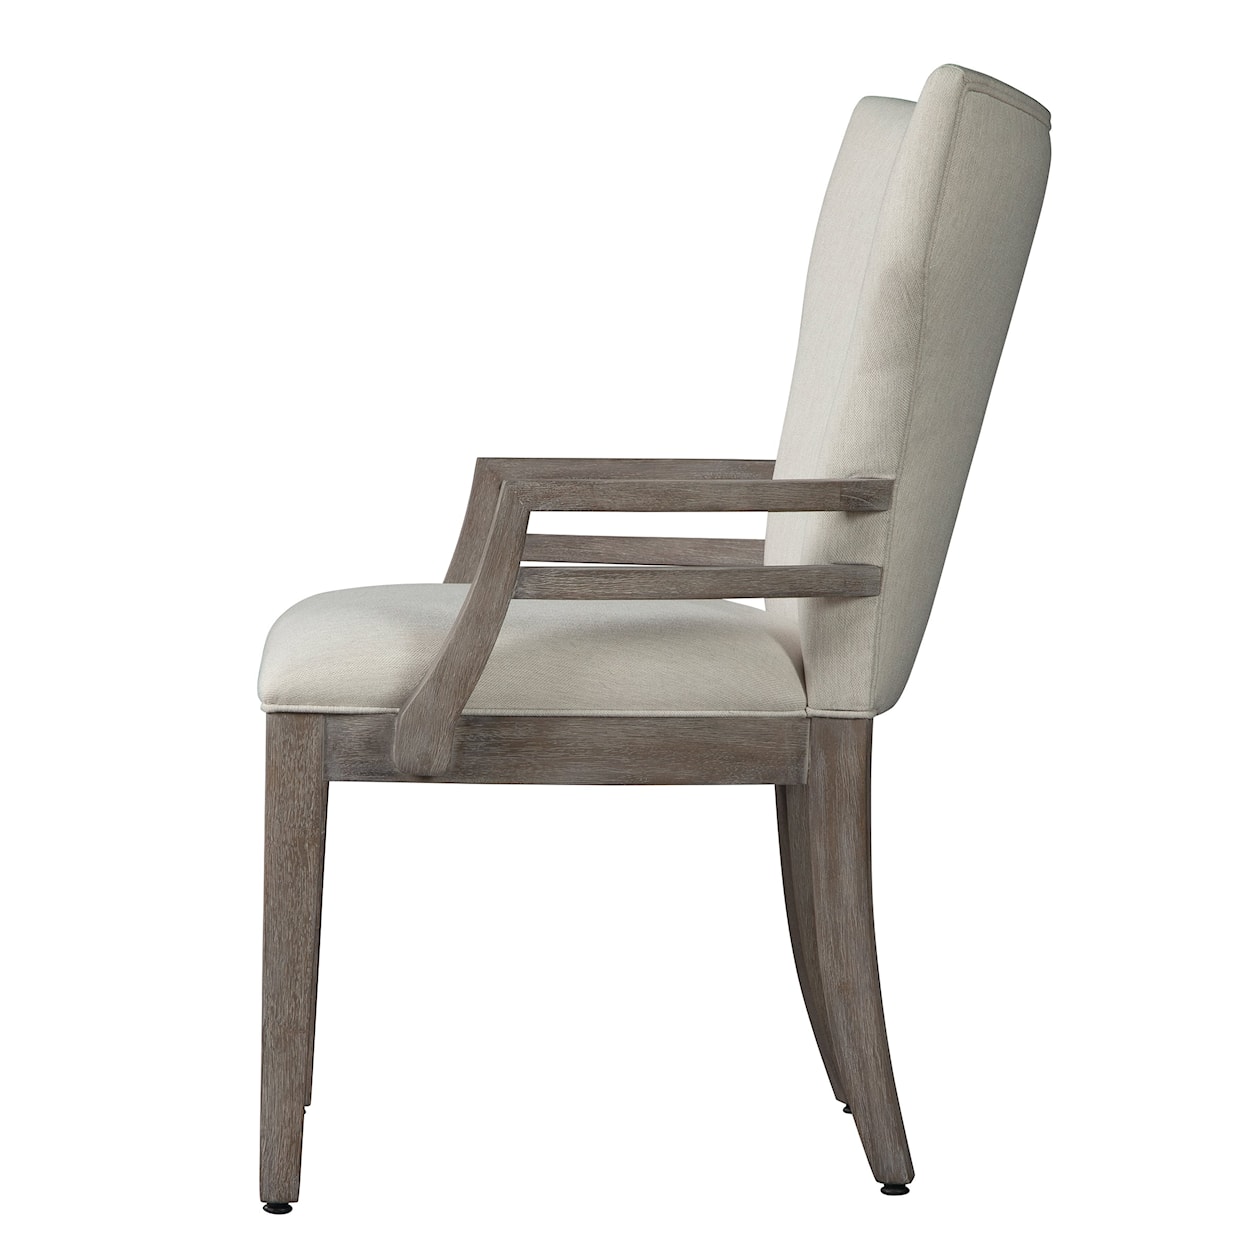 Hekman Sedona Upholstered Dining Arm Chair